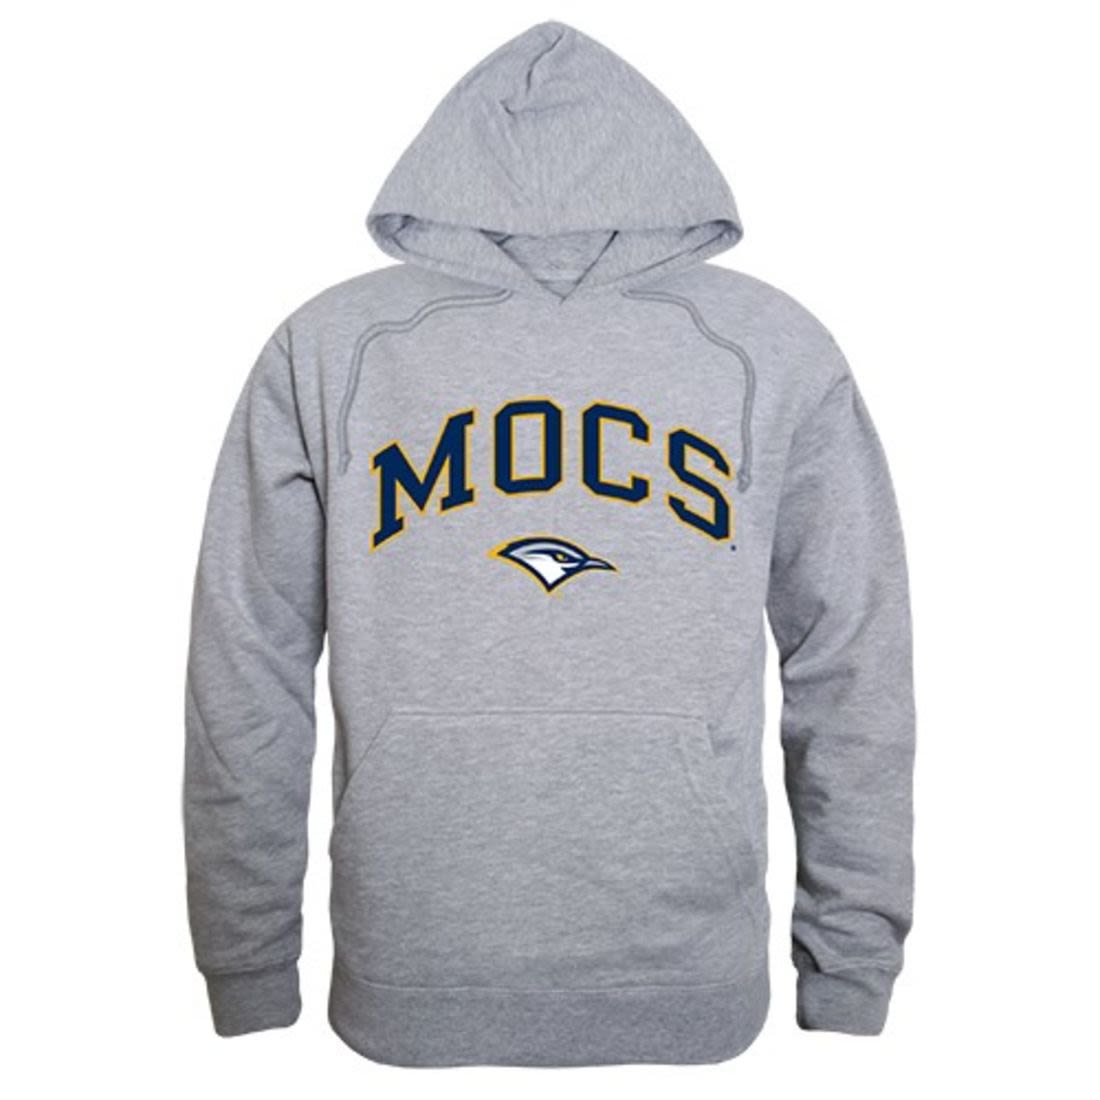 University of Tennessee at Chattanooga (UTC) MOCS Campus Hoodie Sweatshirt Heather Grey-Campus-Wardrobe